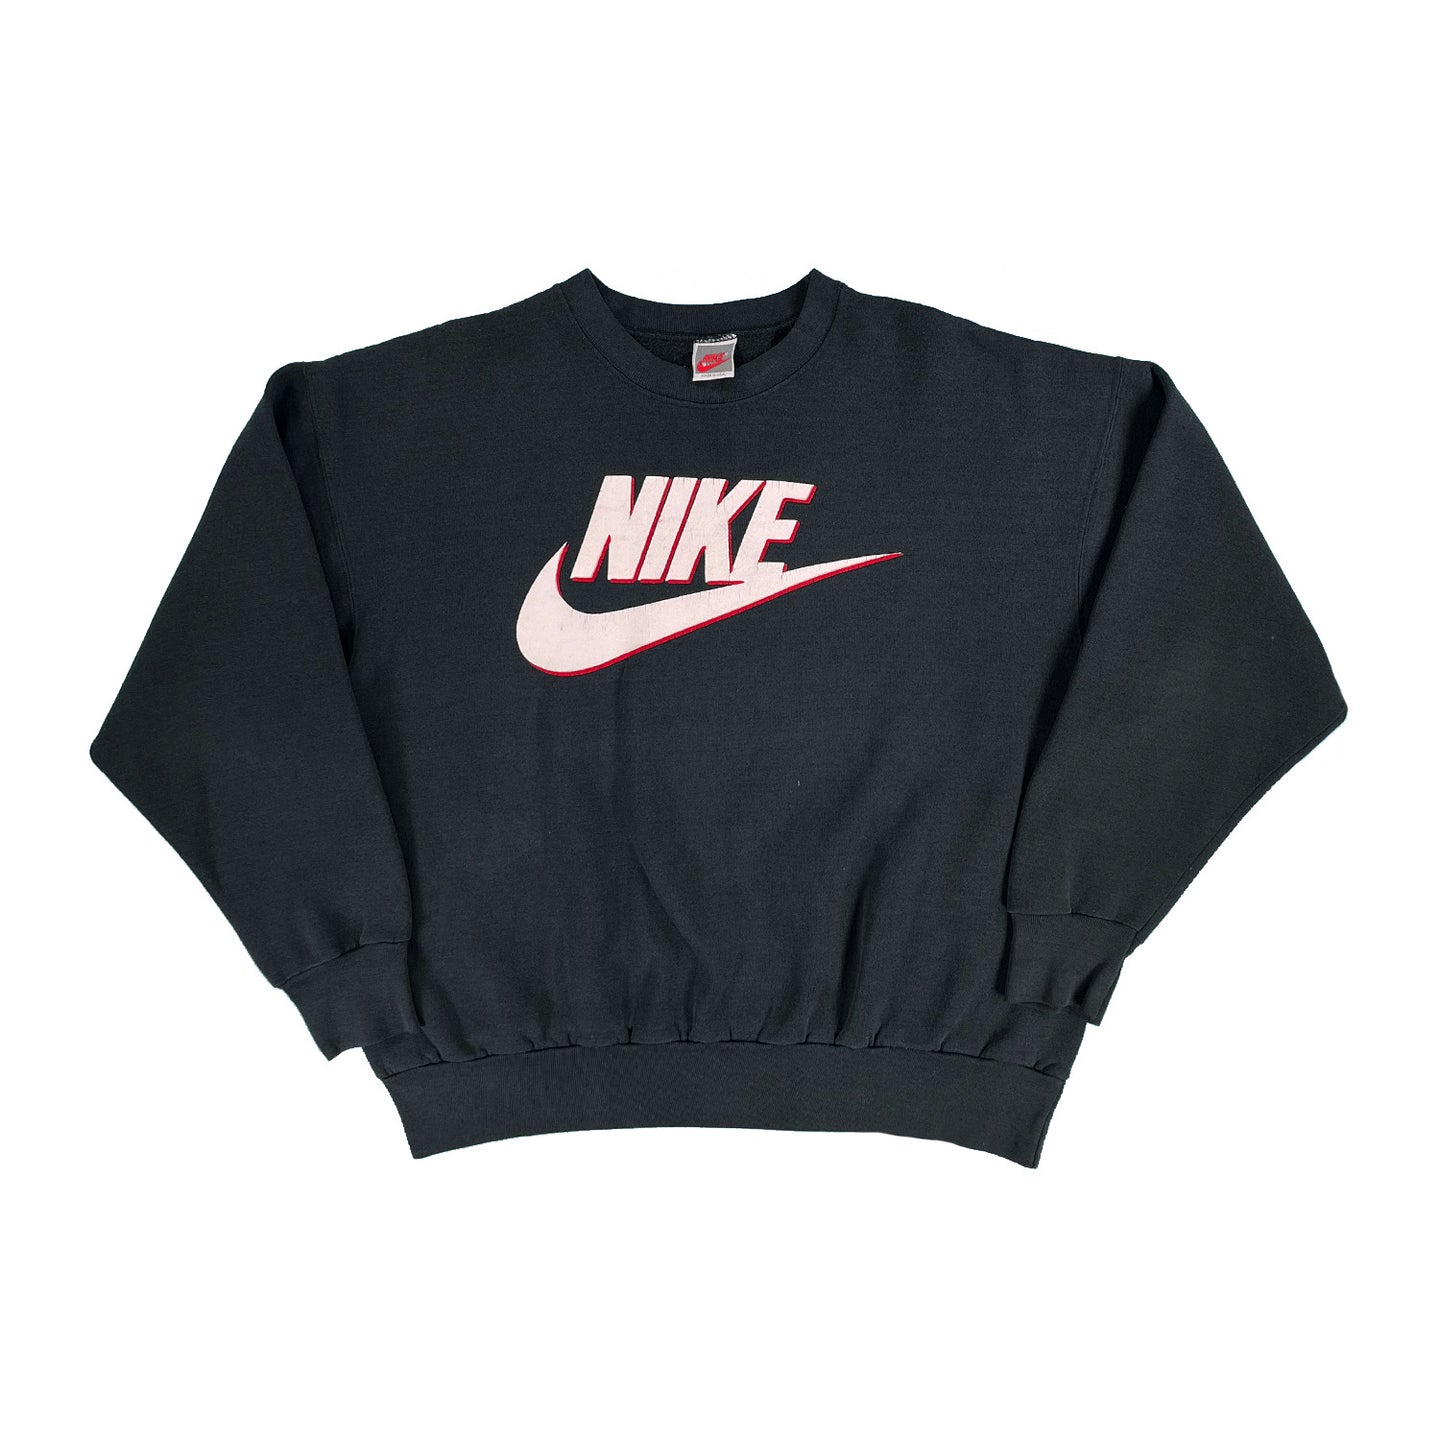 '90s Nike big logo crewneck M